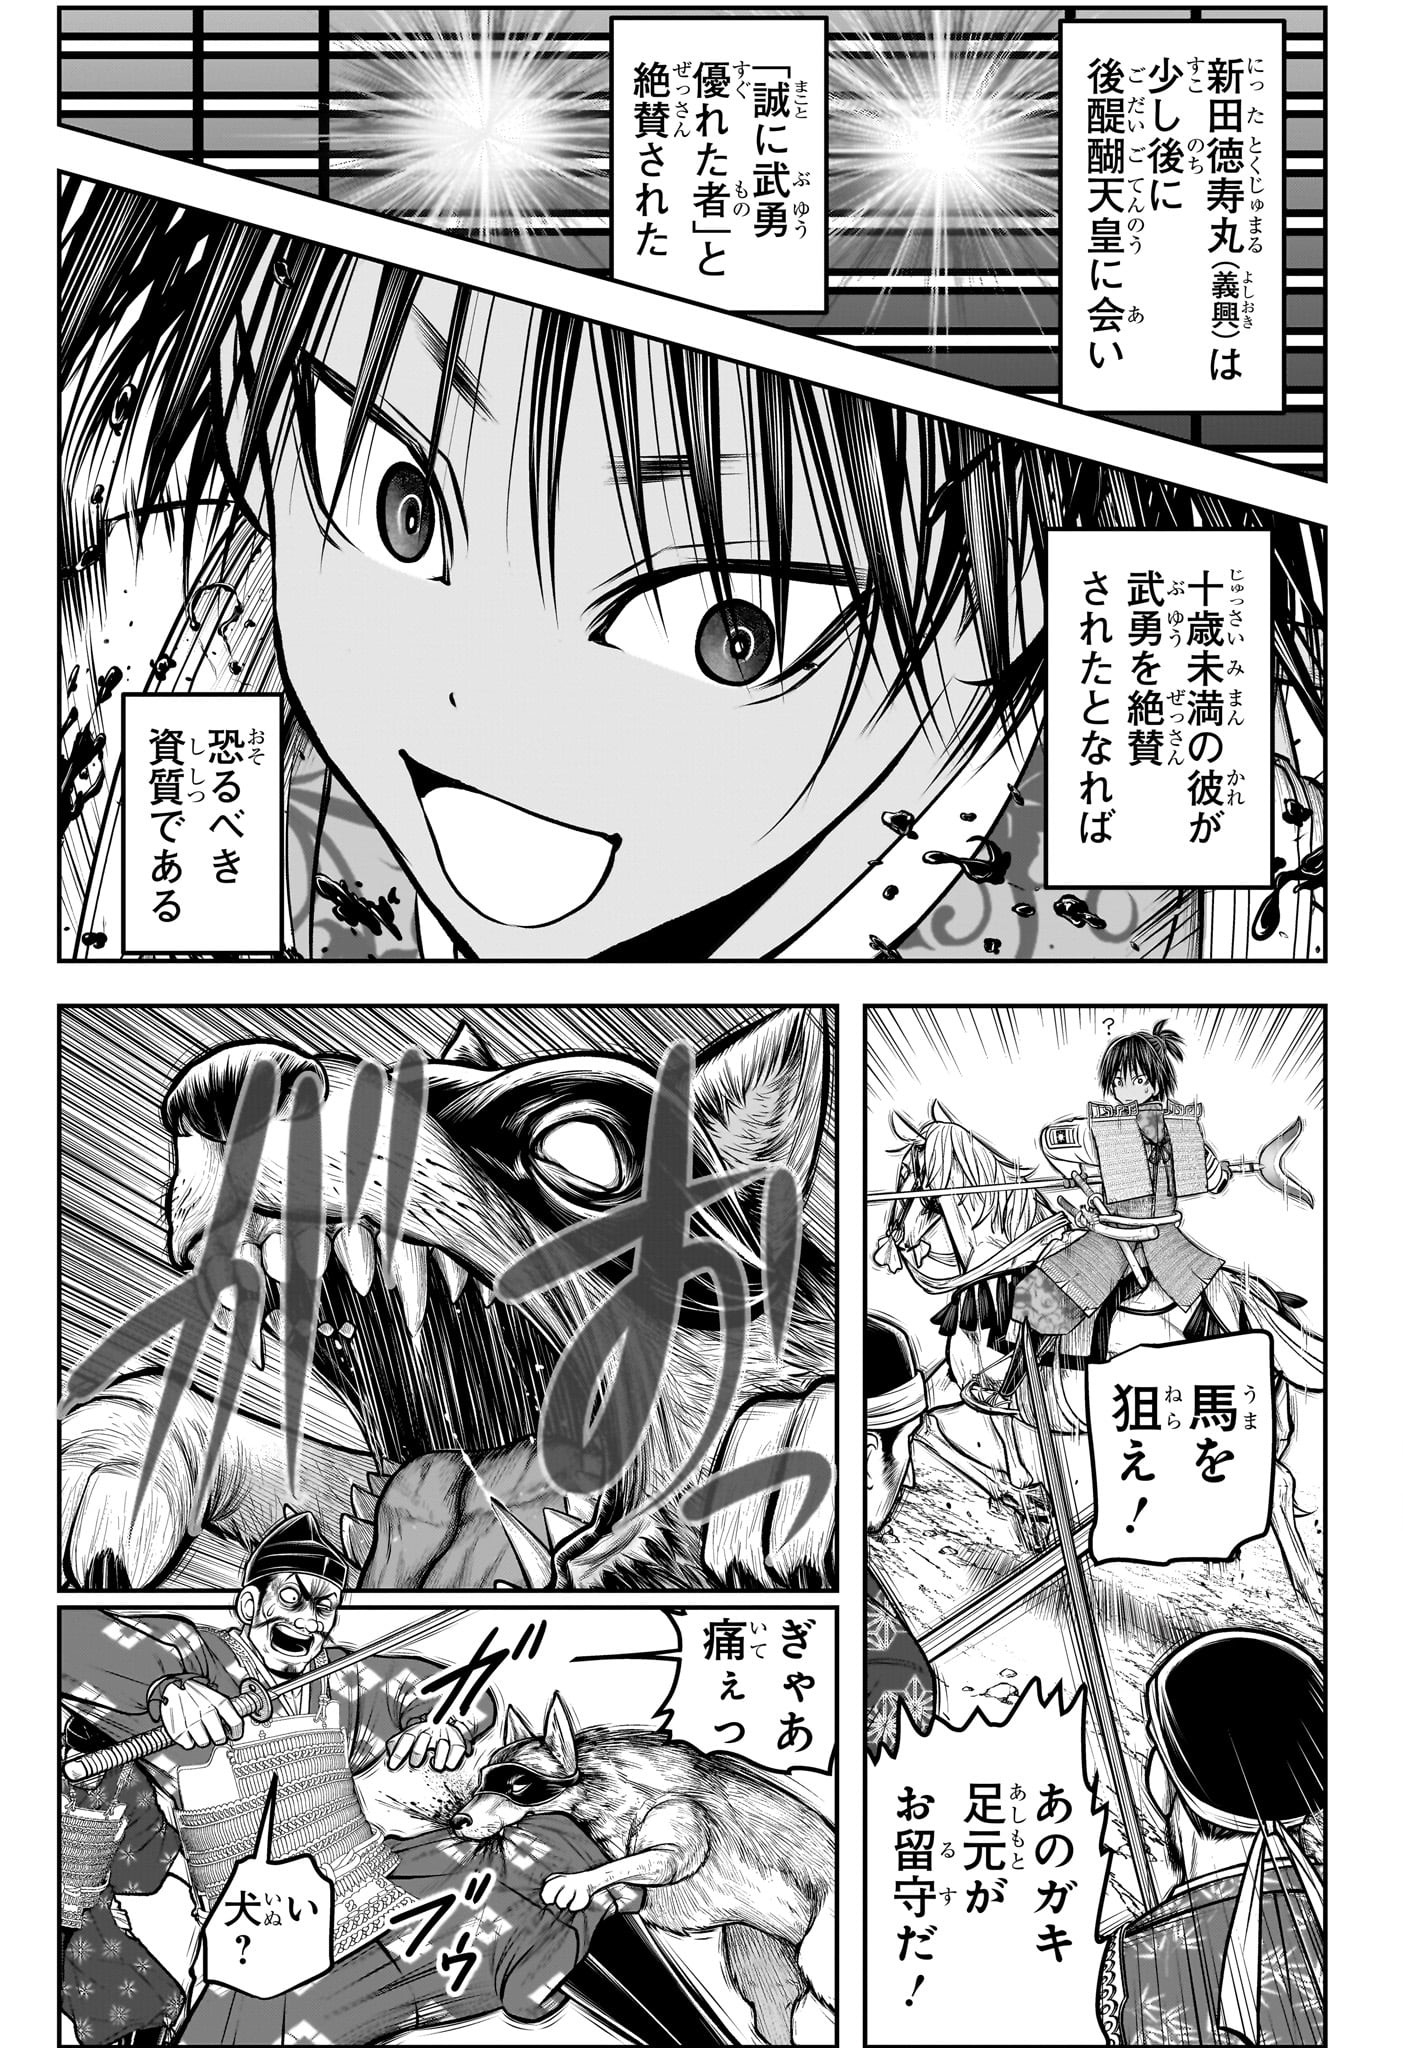 Nige Jouzu no Wakagimi - Chapter 138 - Page 3